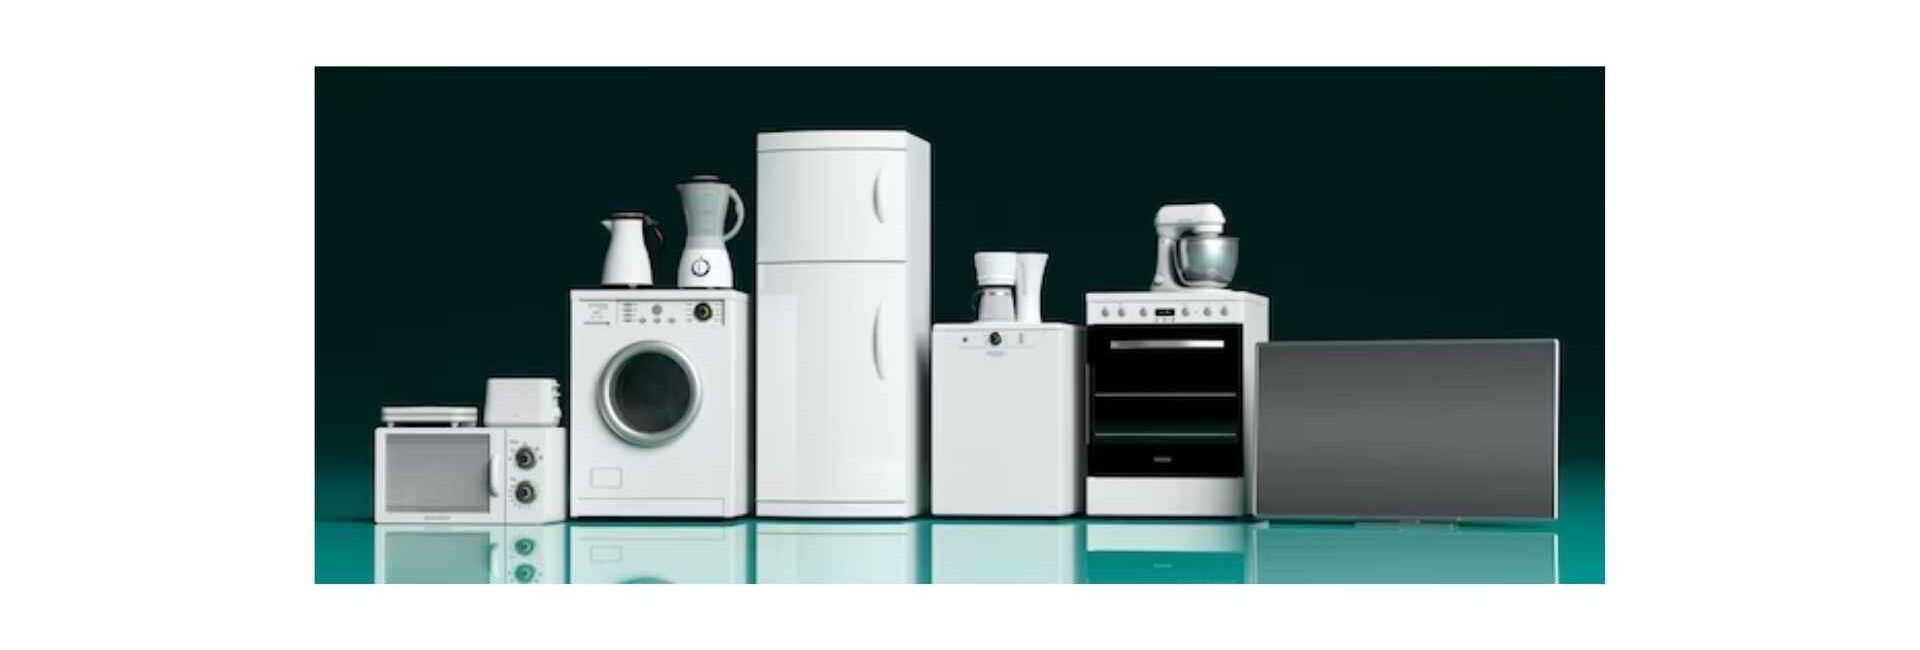 Ankur Electronics - home appliances in Noida